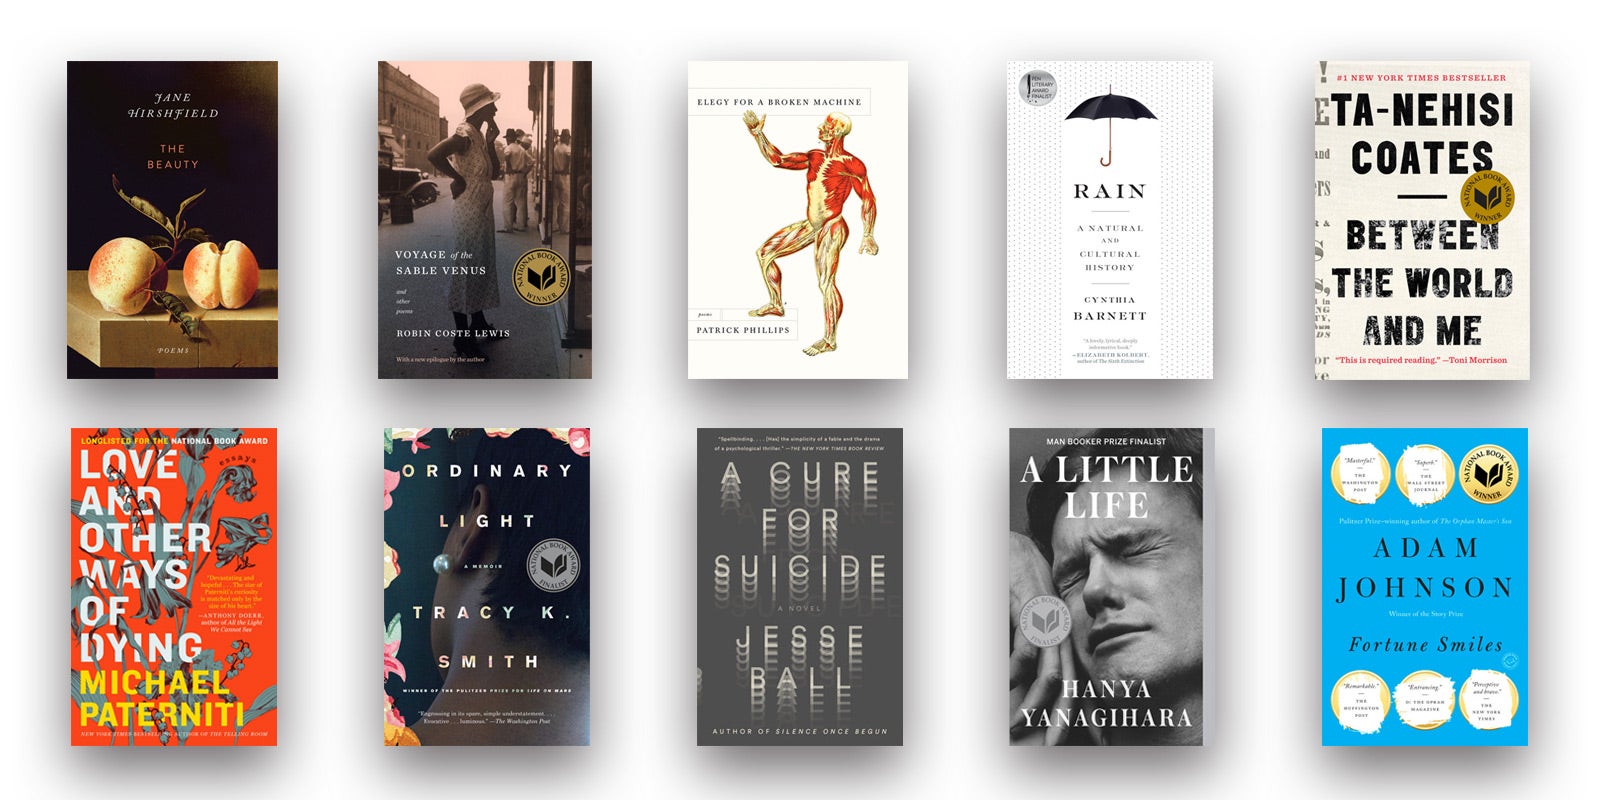 National Book Foundation Announces 2015 National Book Award Longlists